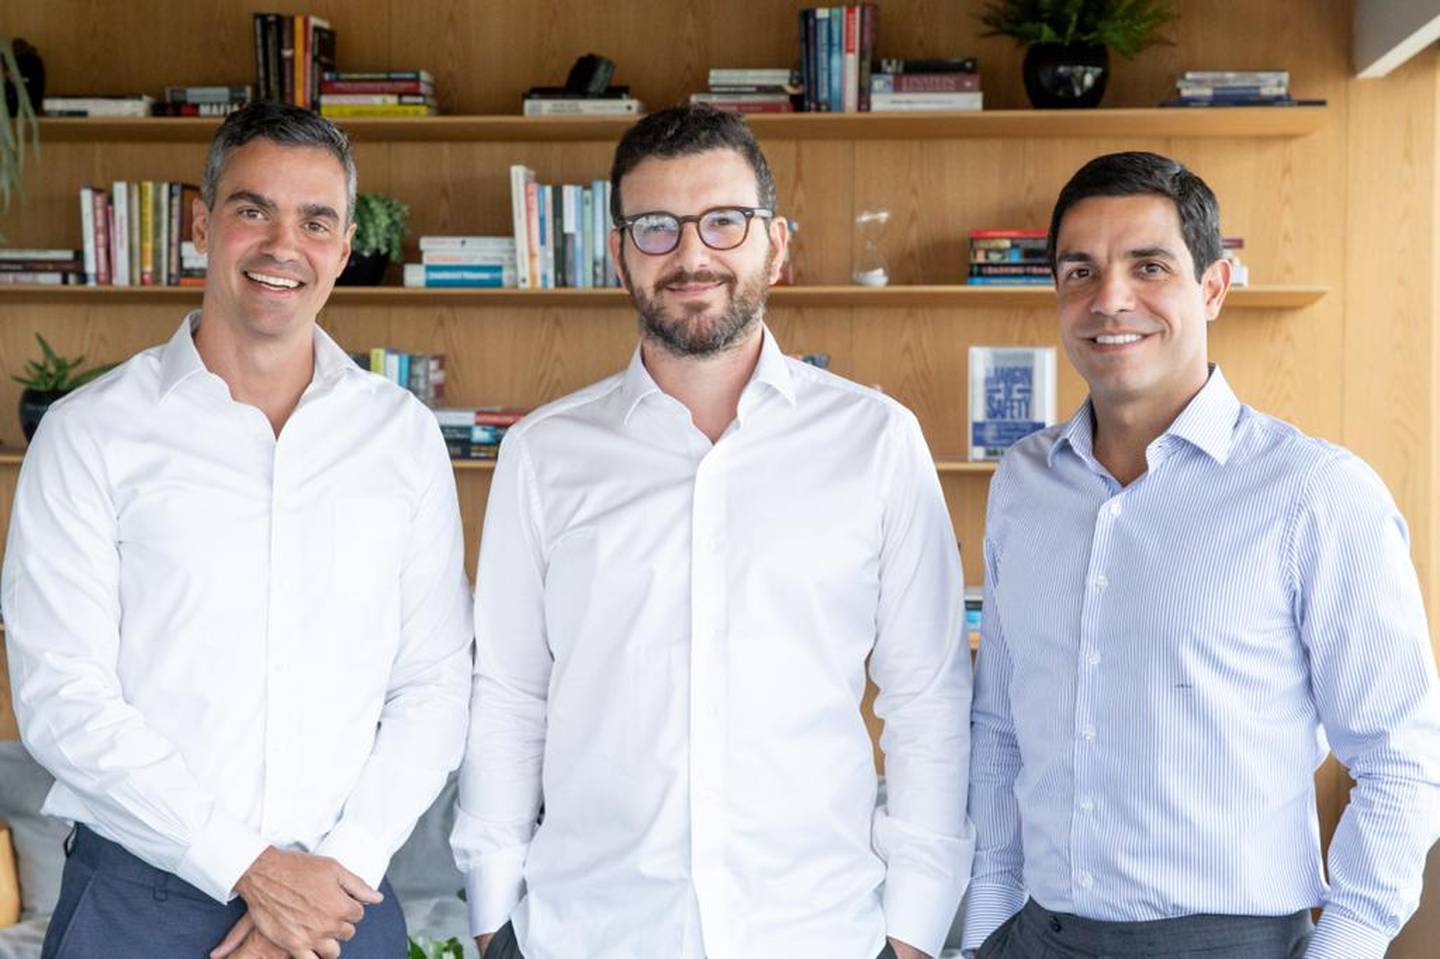 Lucas Canhoto, Marcelo Hallack and Joao MendesSource: Prisma Capitaldfd